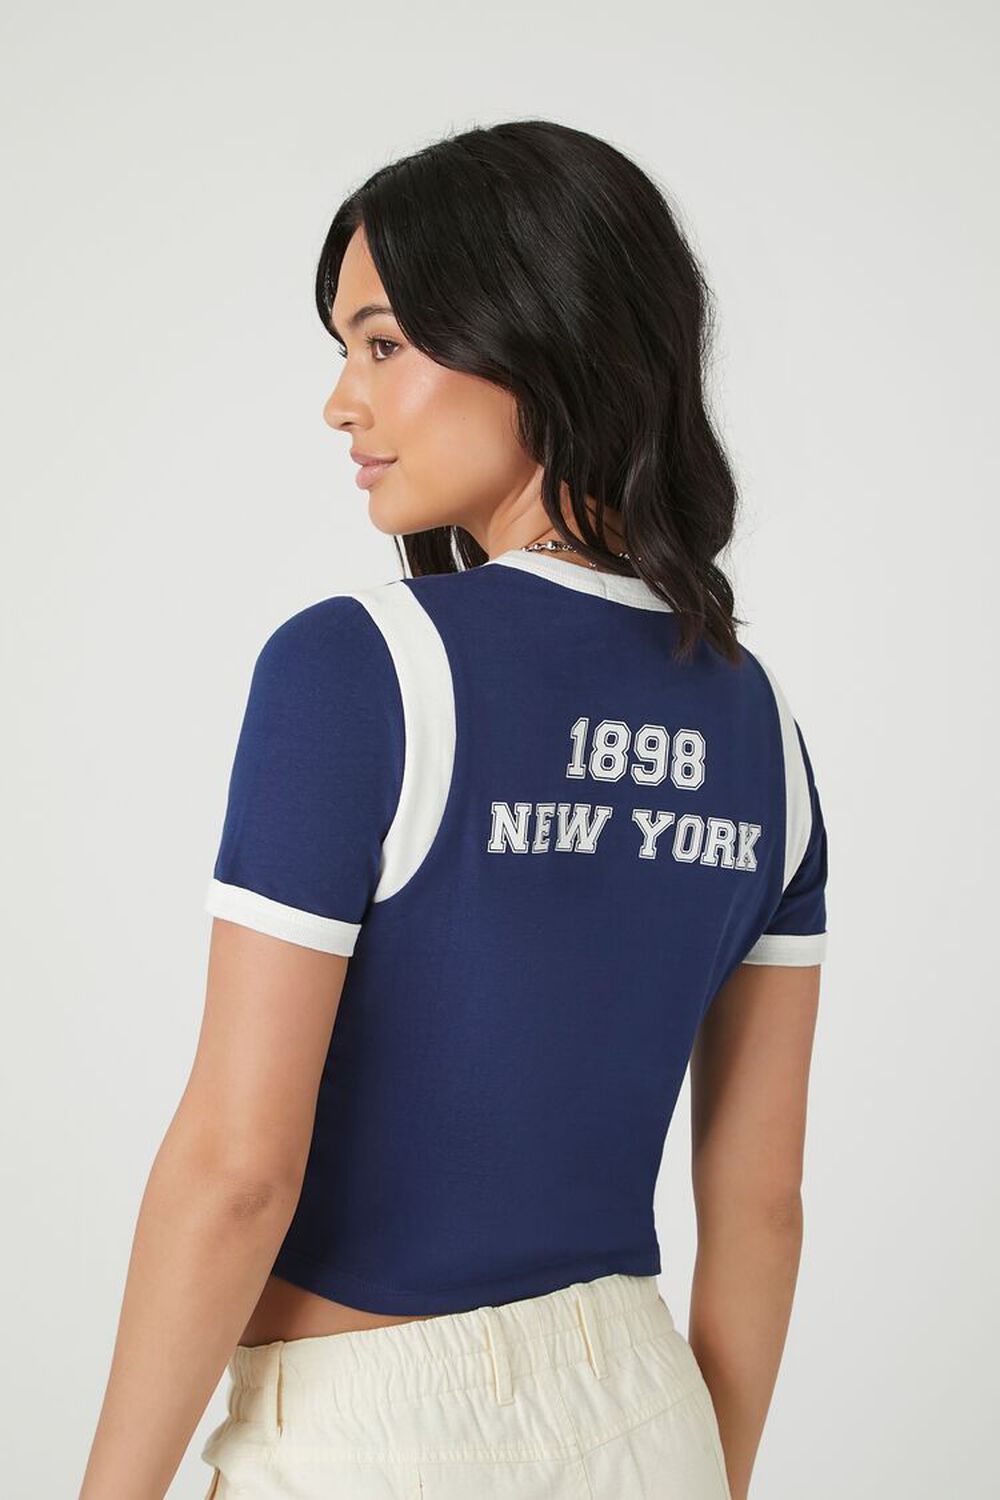 Women's Blue New York Yankees Tube Top Tee Shirt SMALL 